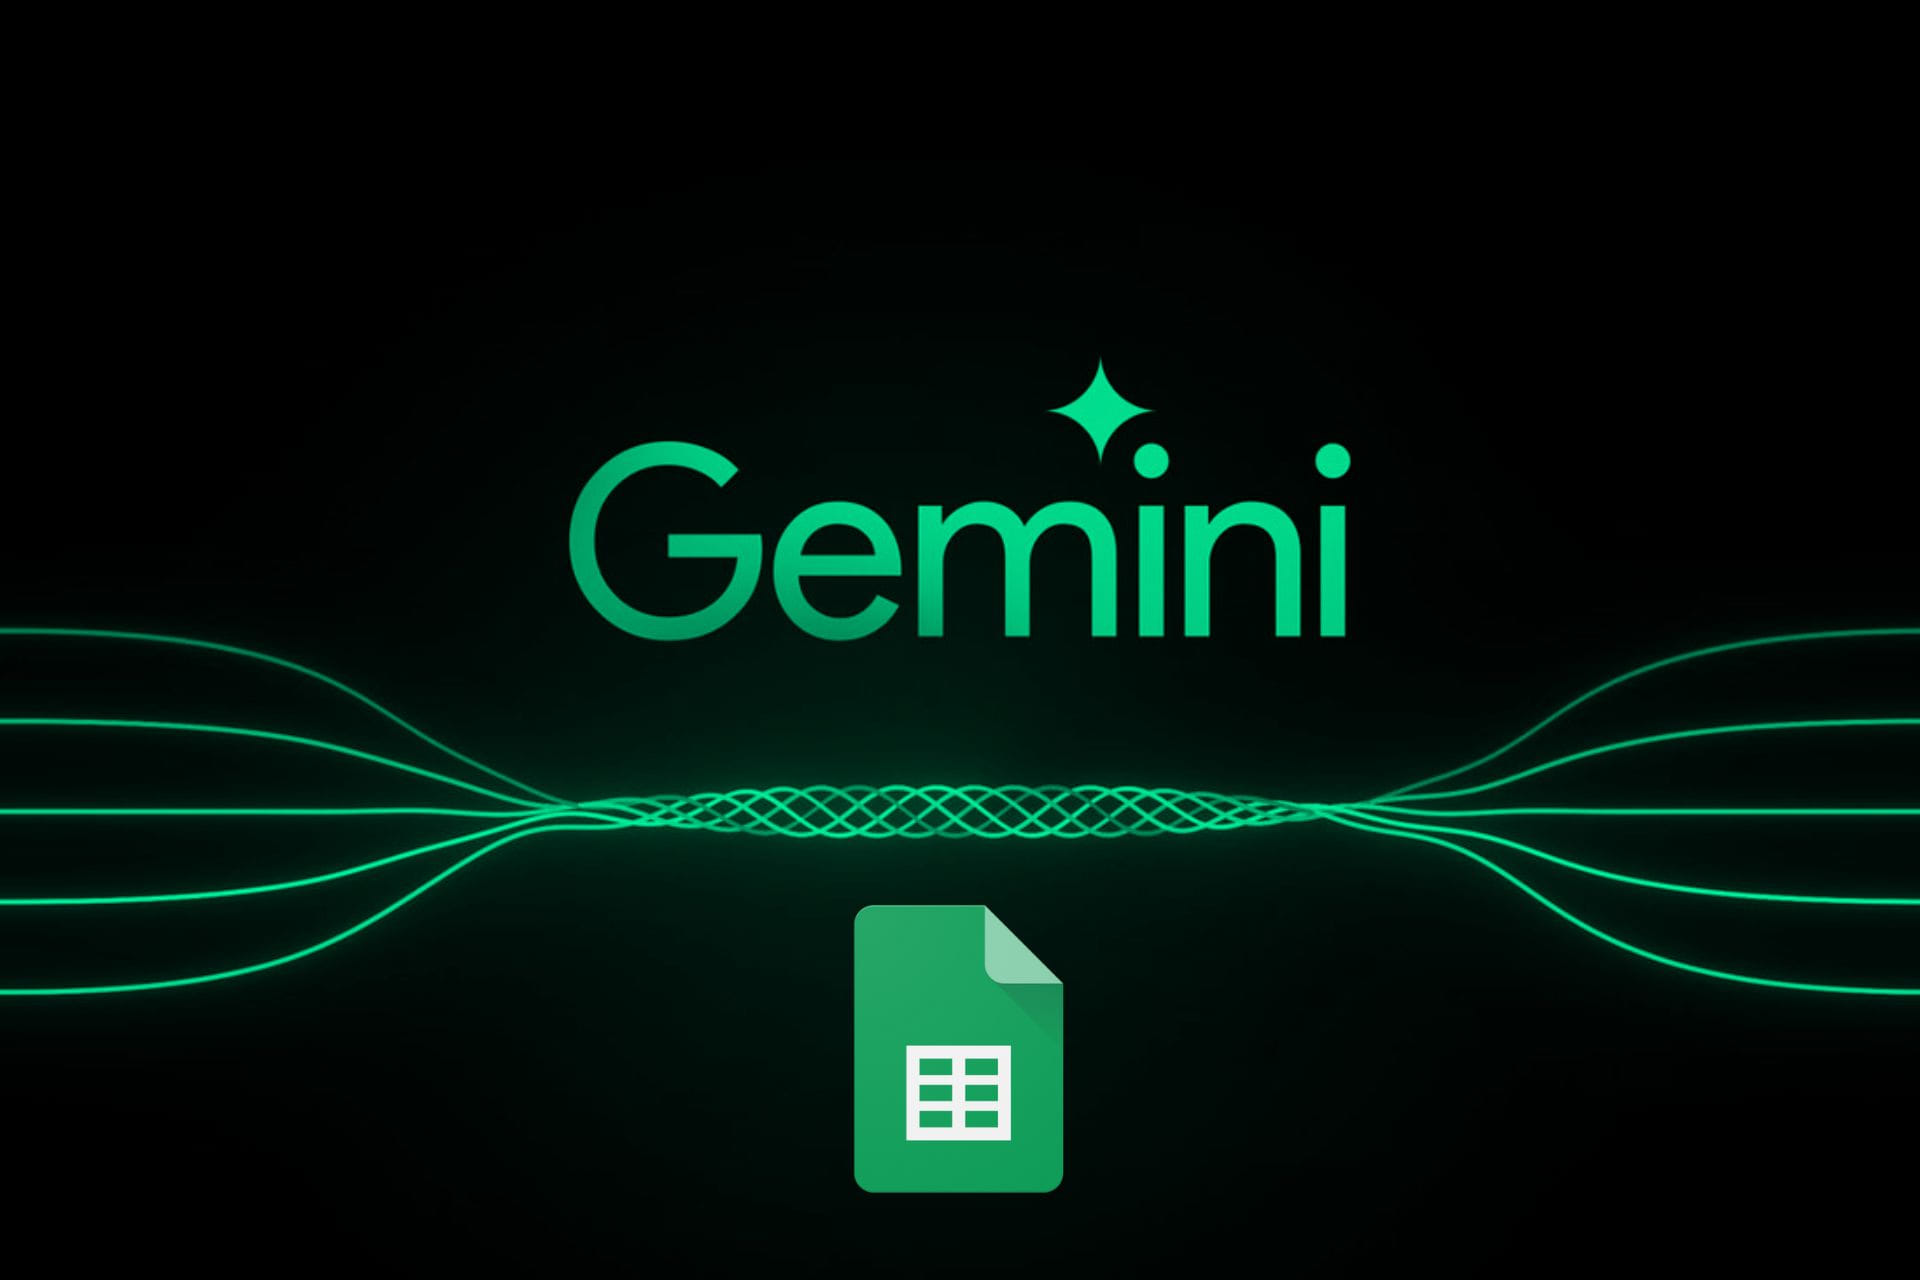 Gemini featured next to Google Sheets logo